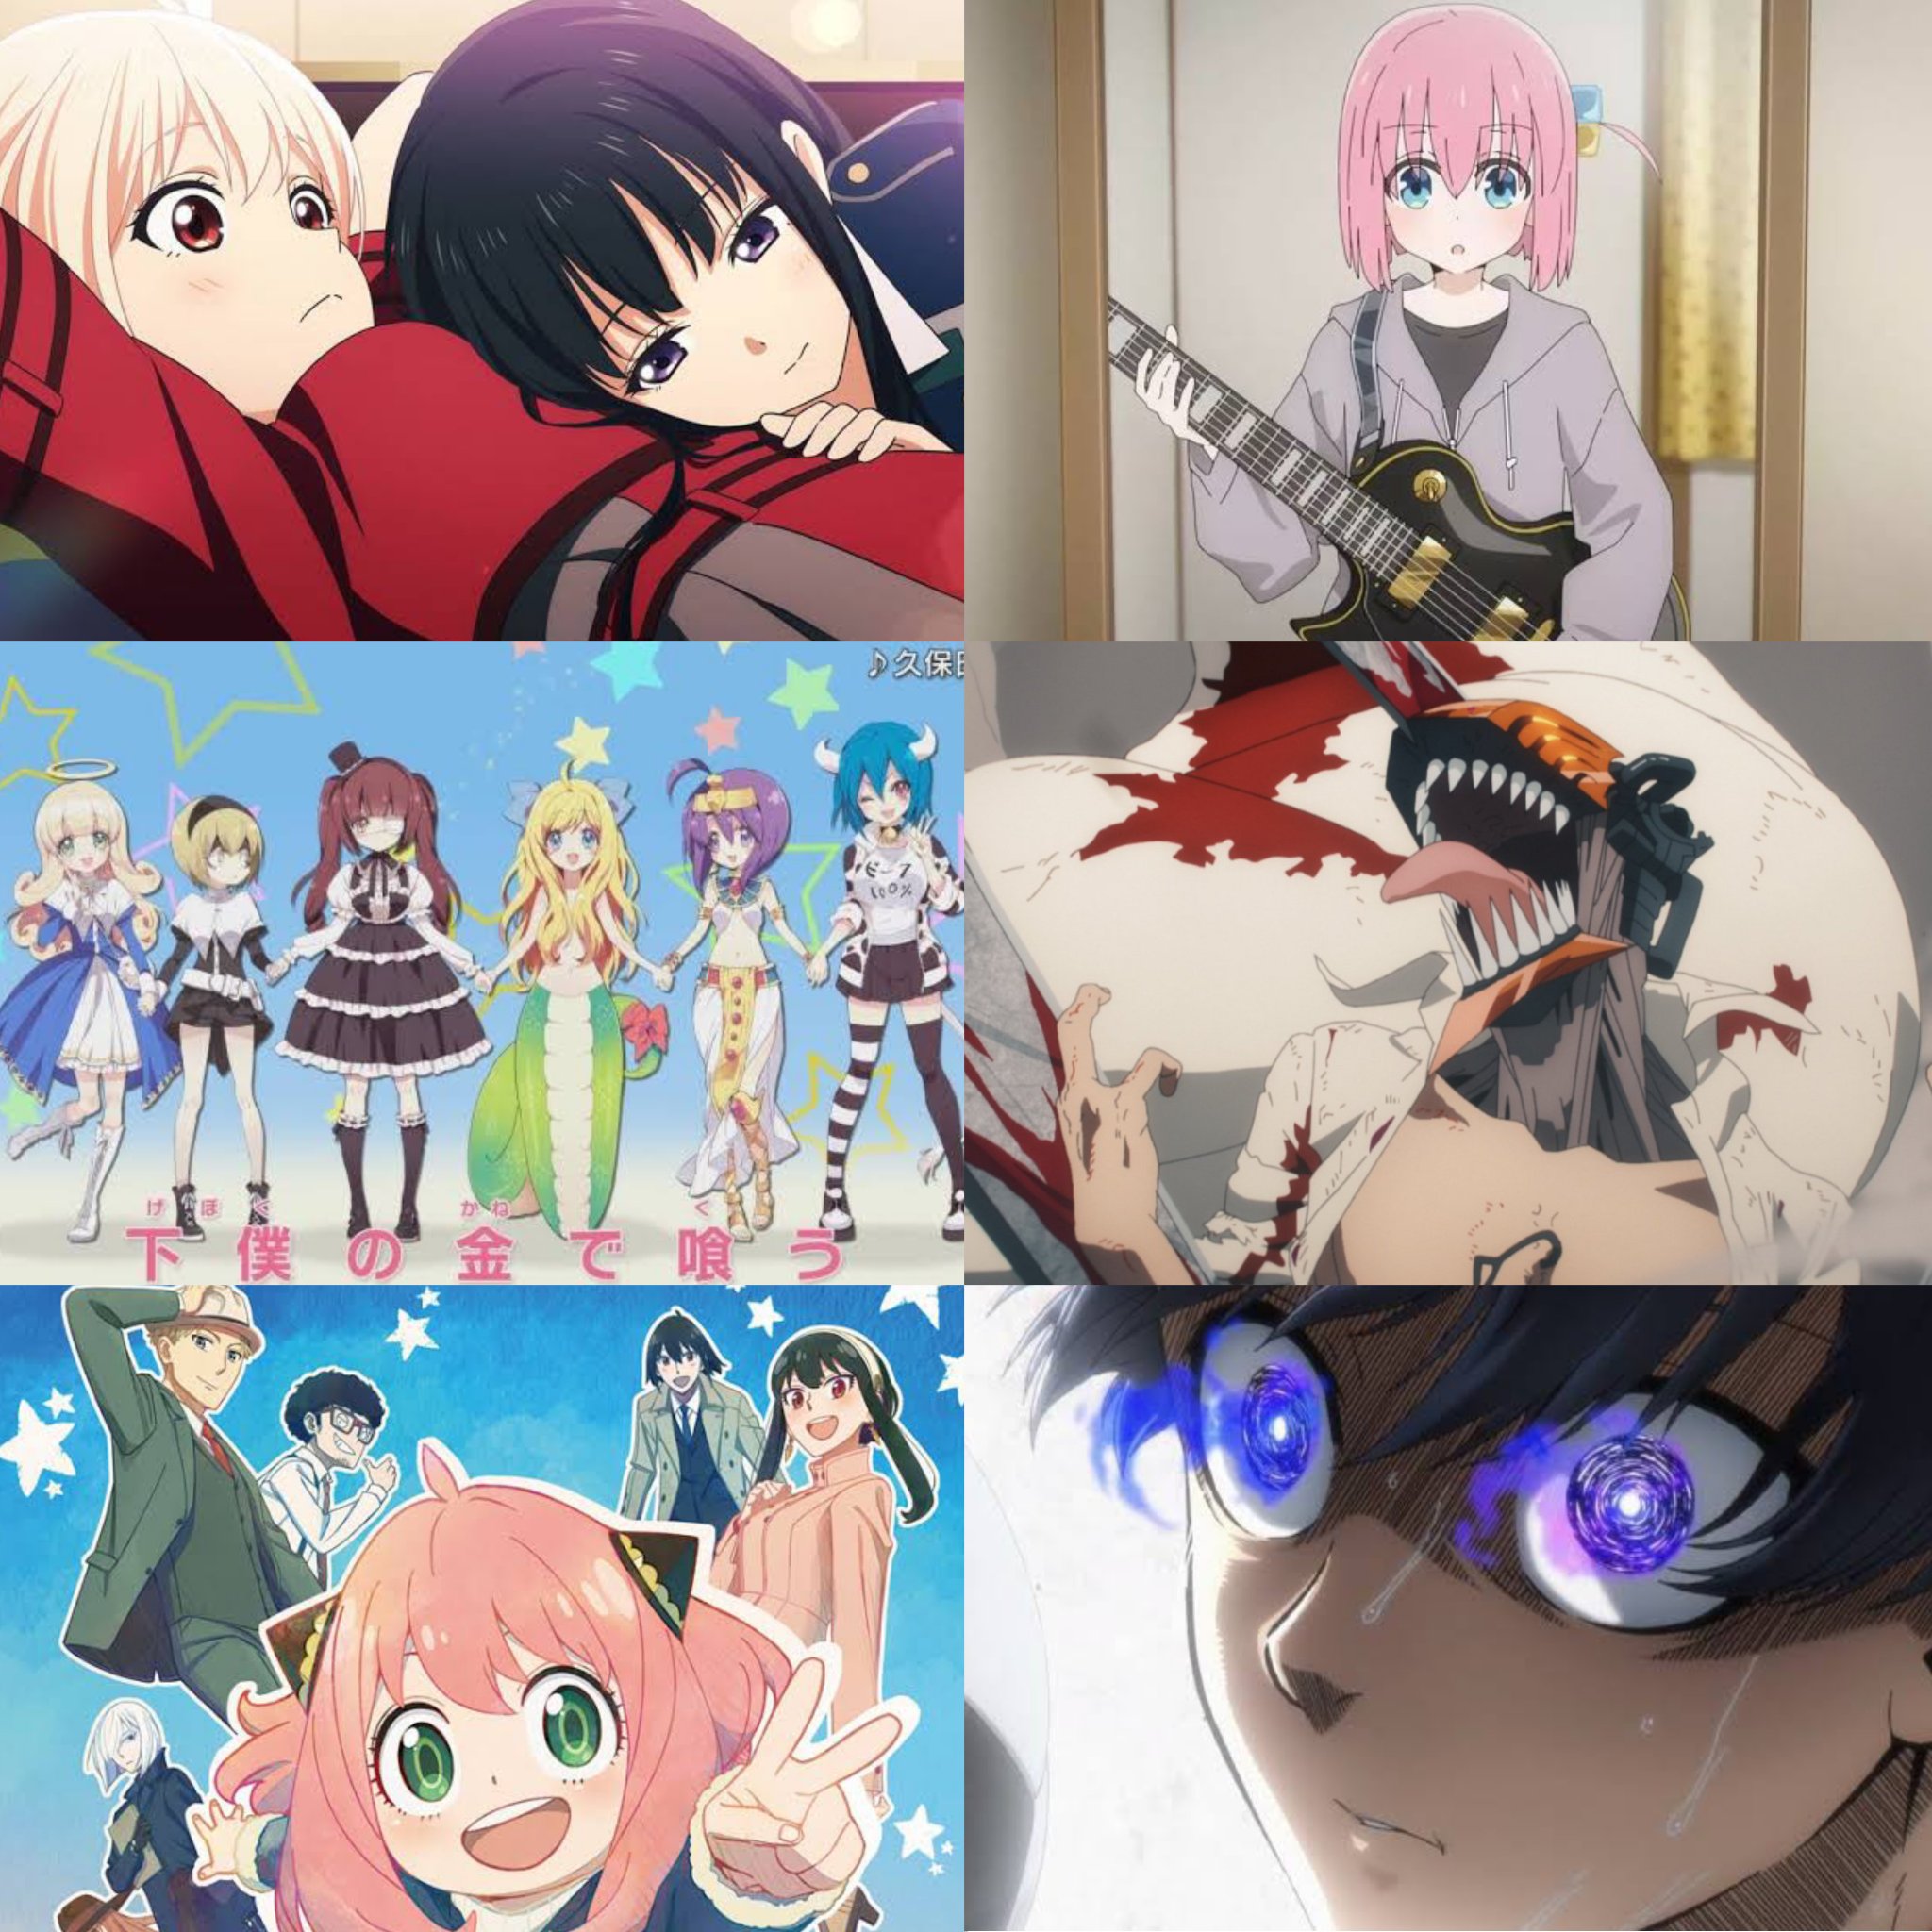 Animes In Japan 🎄 on X: INFO Esses são os animes Mais populares de  2022, segundos os leitores do site Anime! Anime!: 1- Lycoris Recoil 2-  Bocchi The Rock! 3- Jashin-chan Dropkick